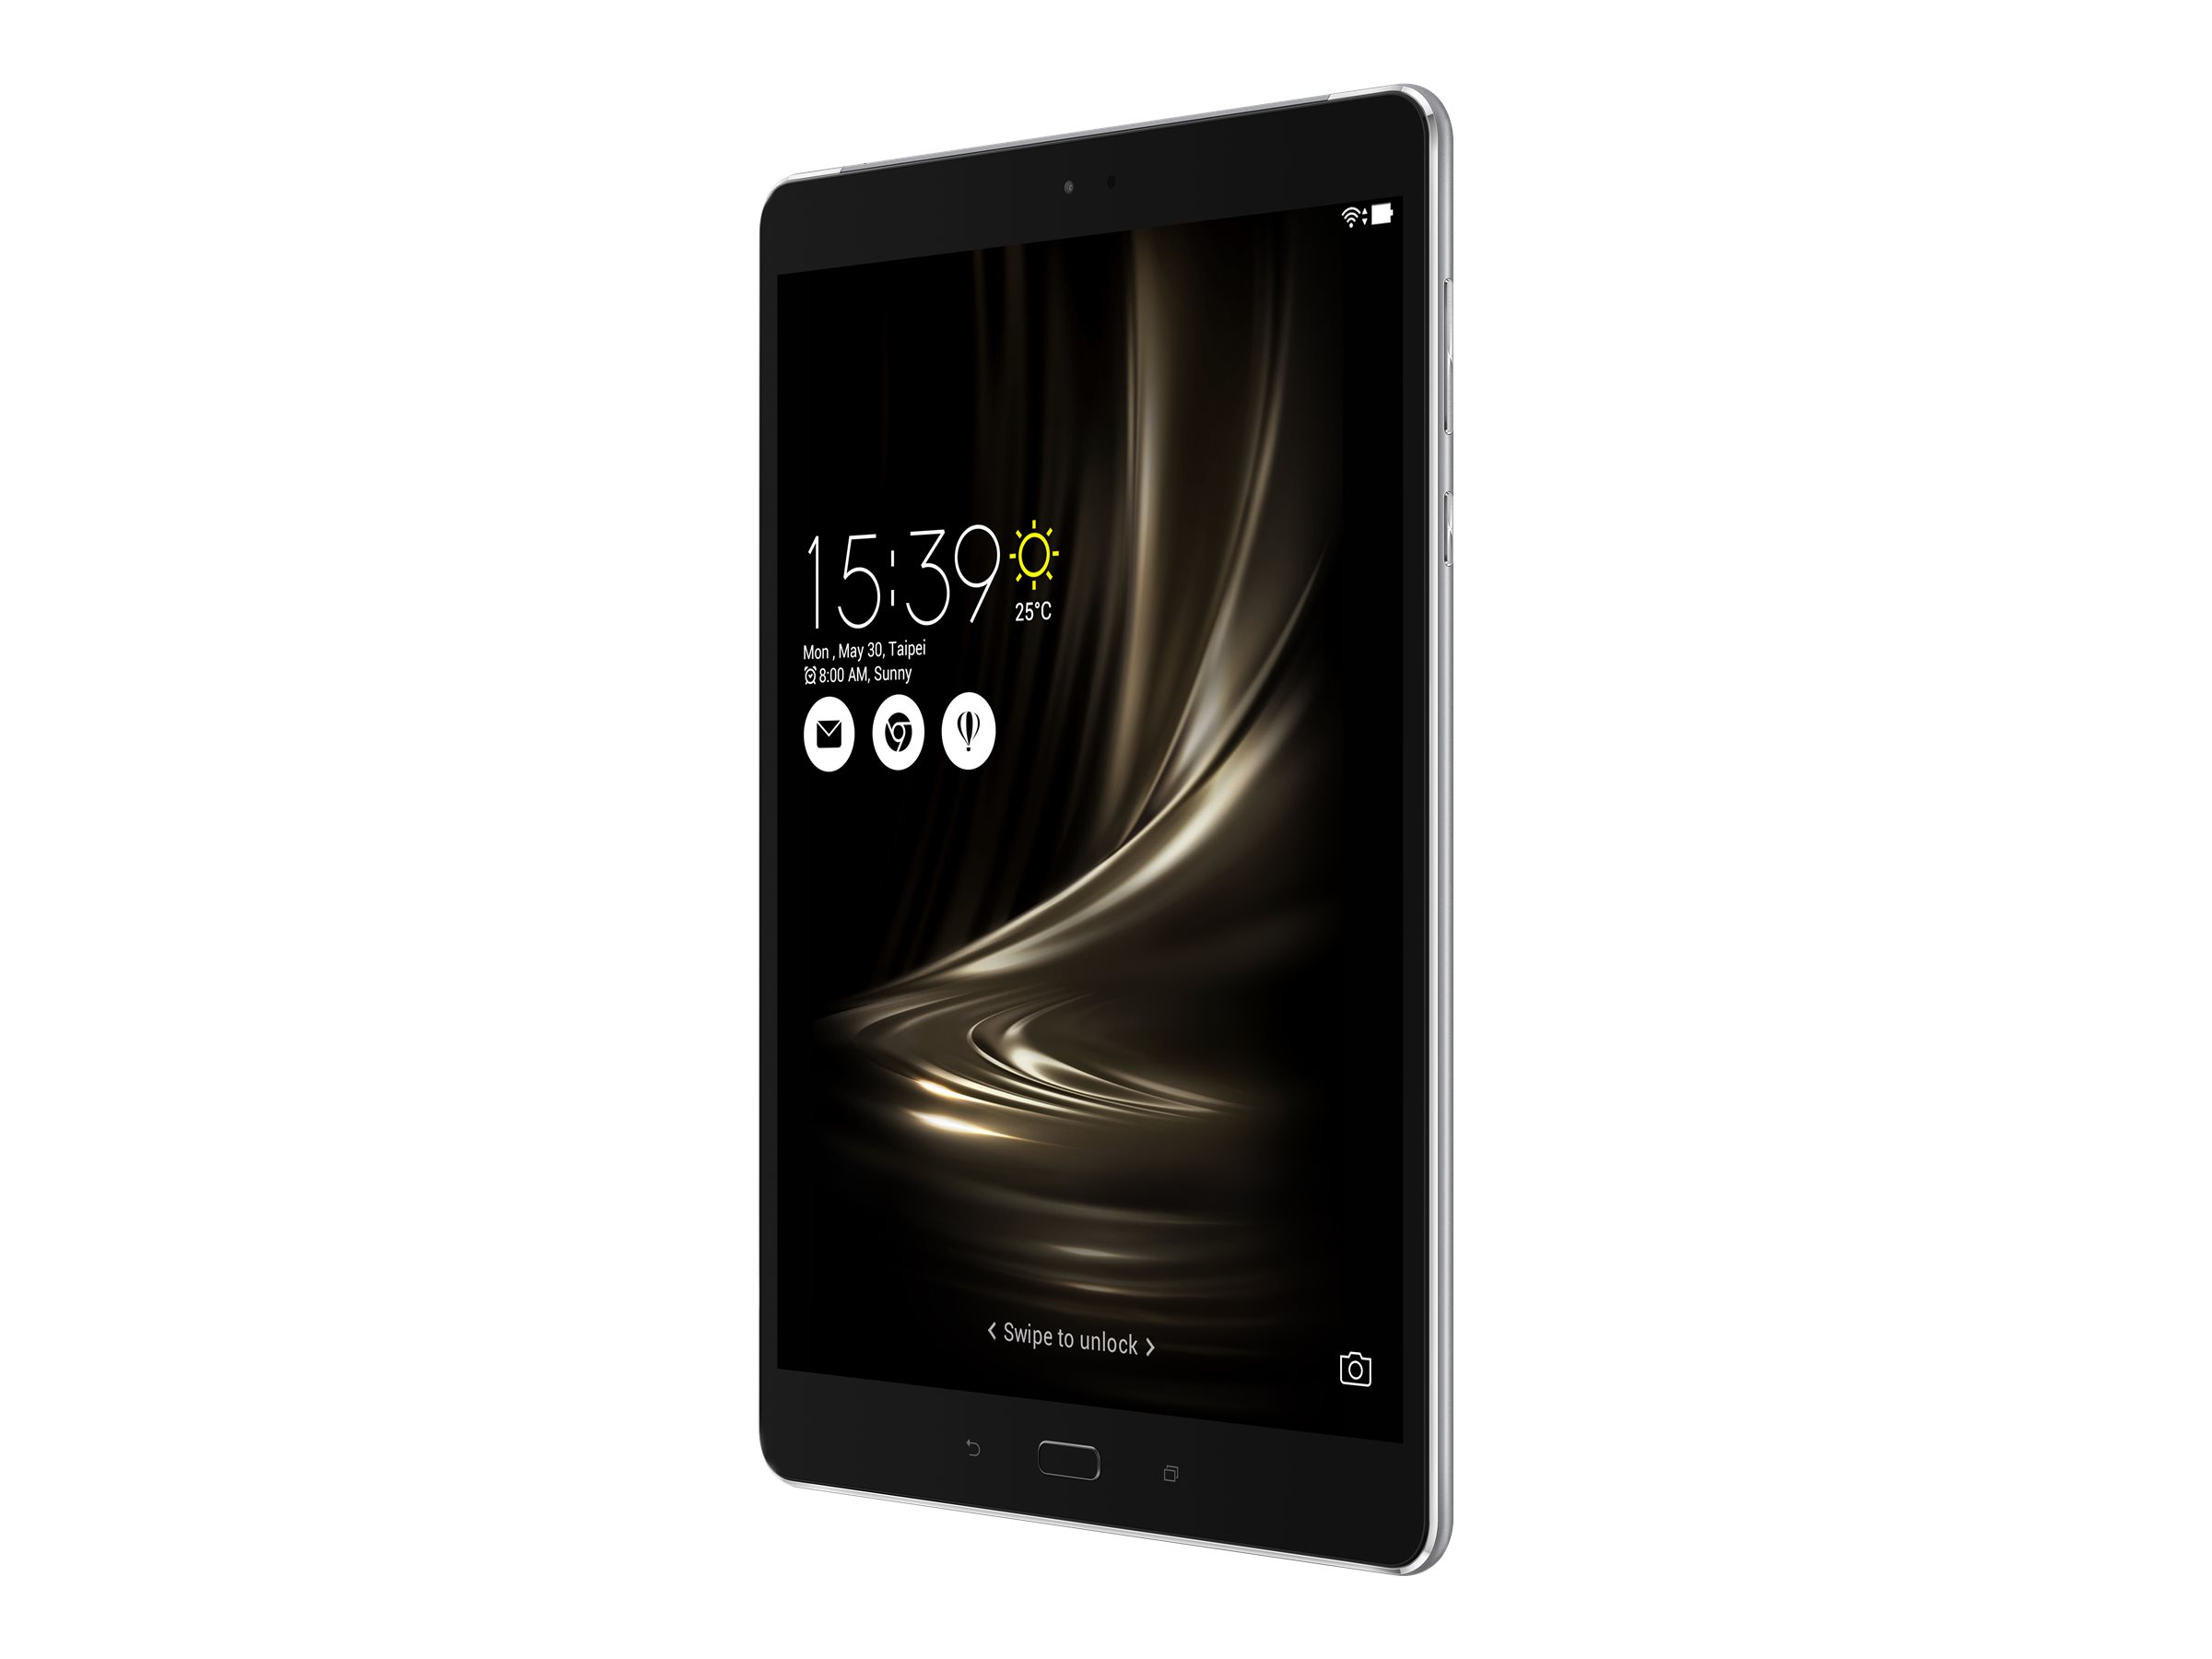 ASUS ZenPad 3S 10 Z500M - Tablet - Android 6.0 (Marshmallow) - 64 GB eMMC - 9.7" IPS (2048 x 1536) - microSD slot - titanium gray - image 2 of 16